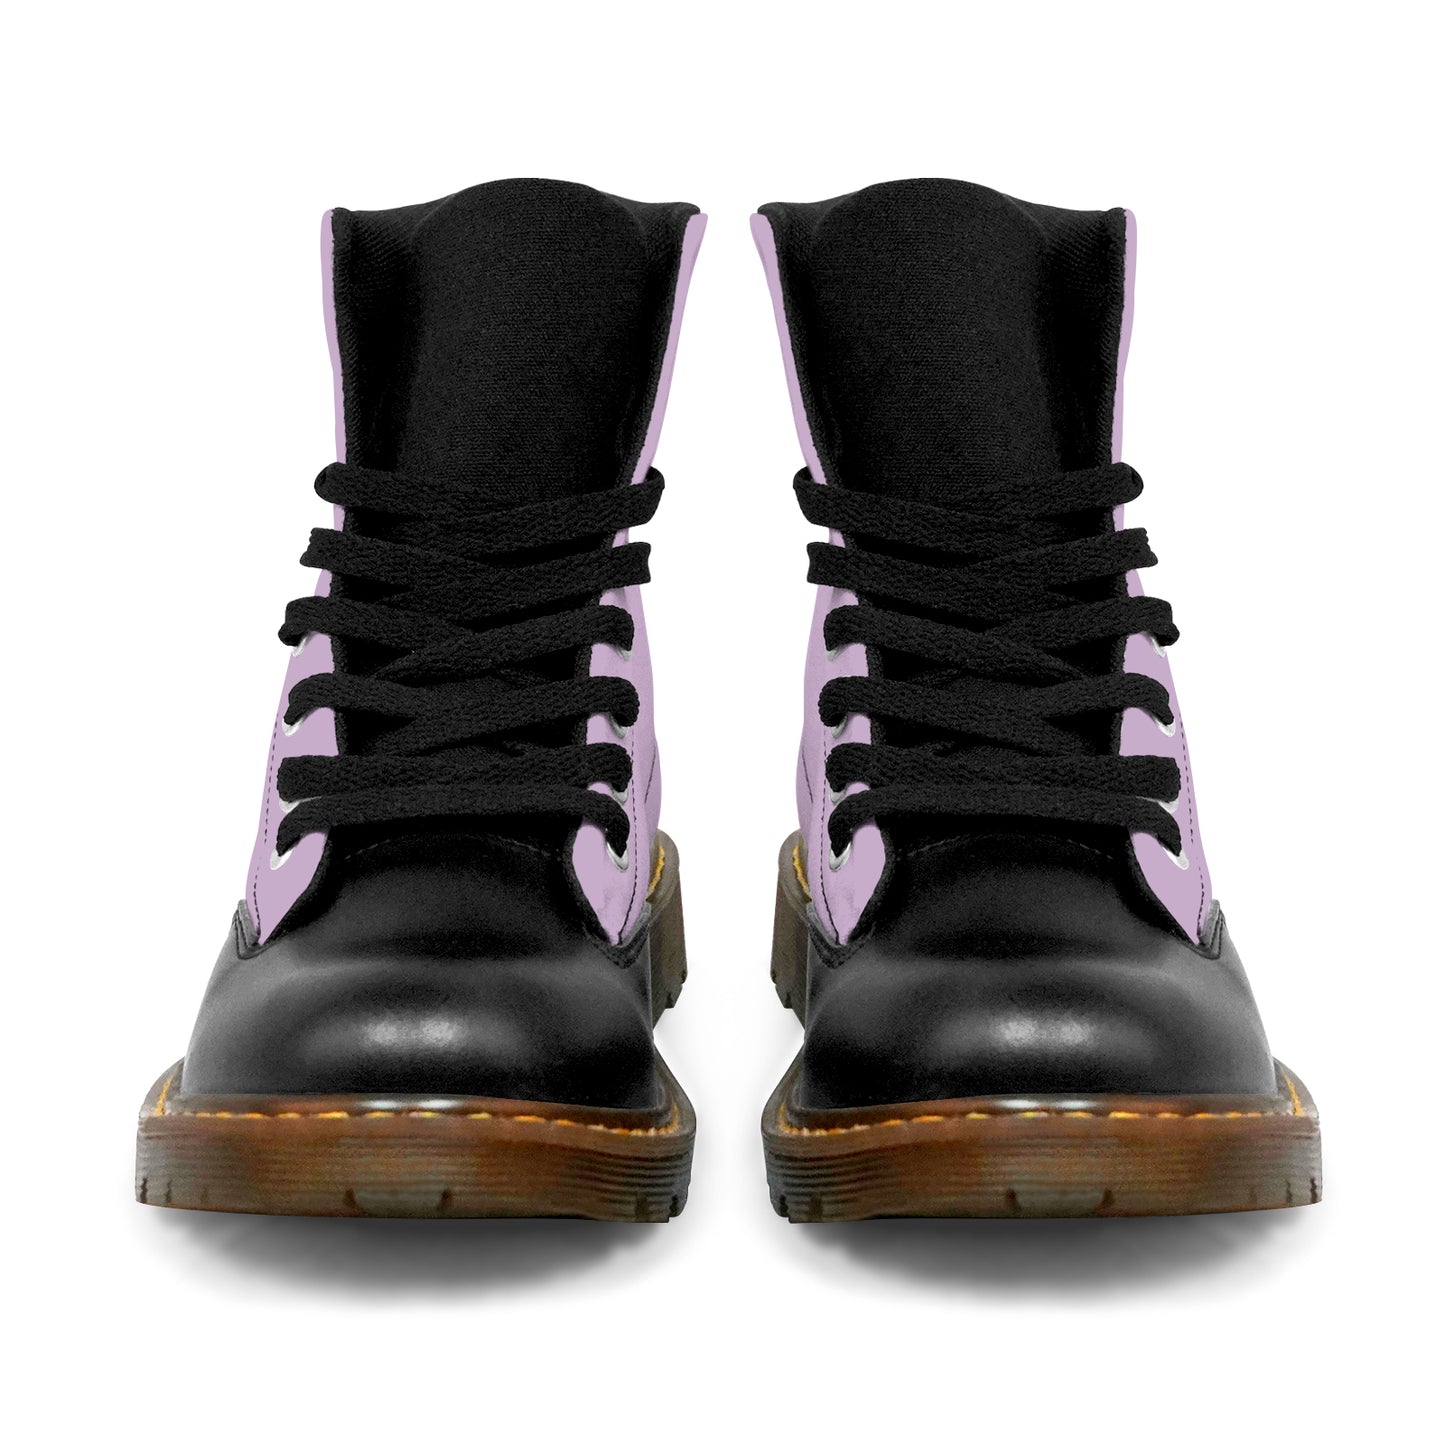 Winter Round Toe Women's Boots - Purple